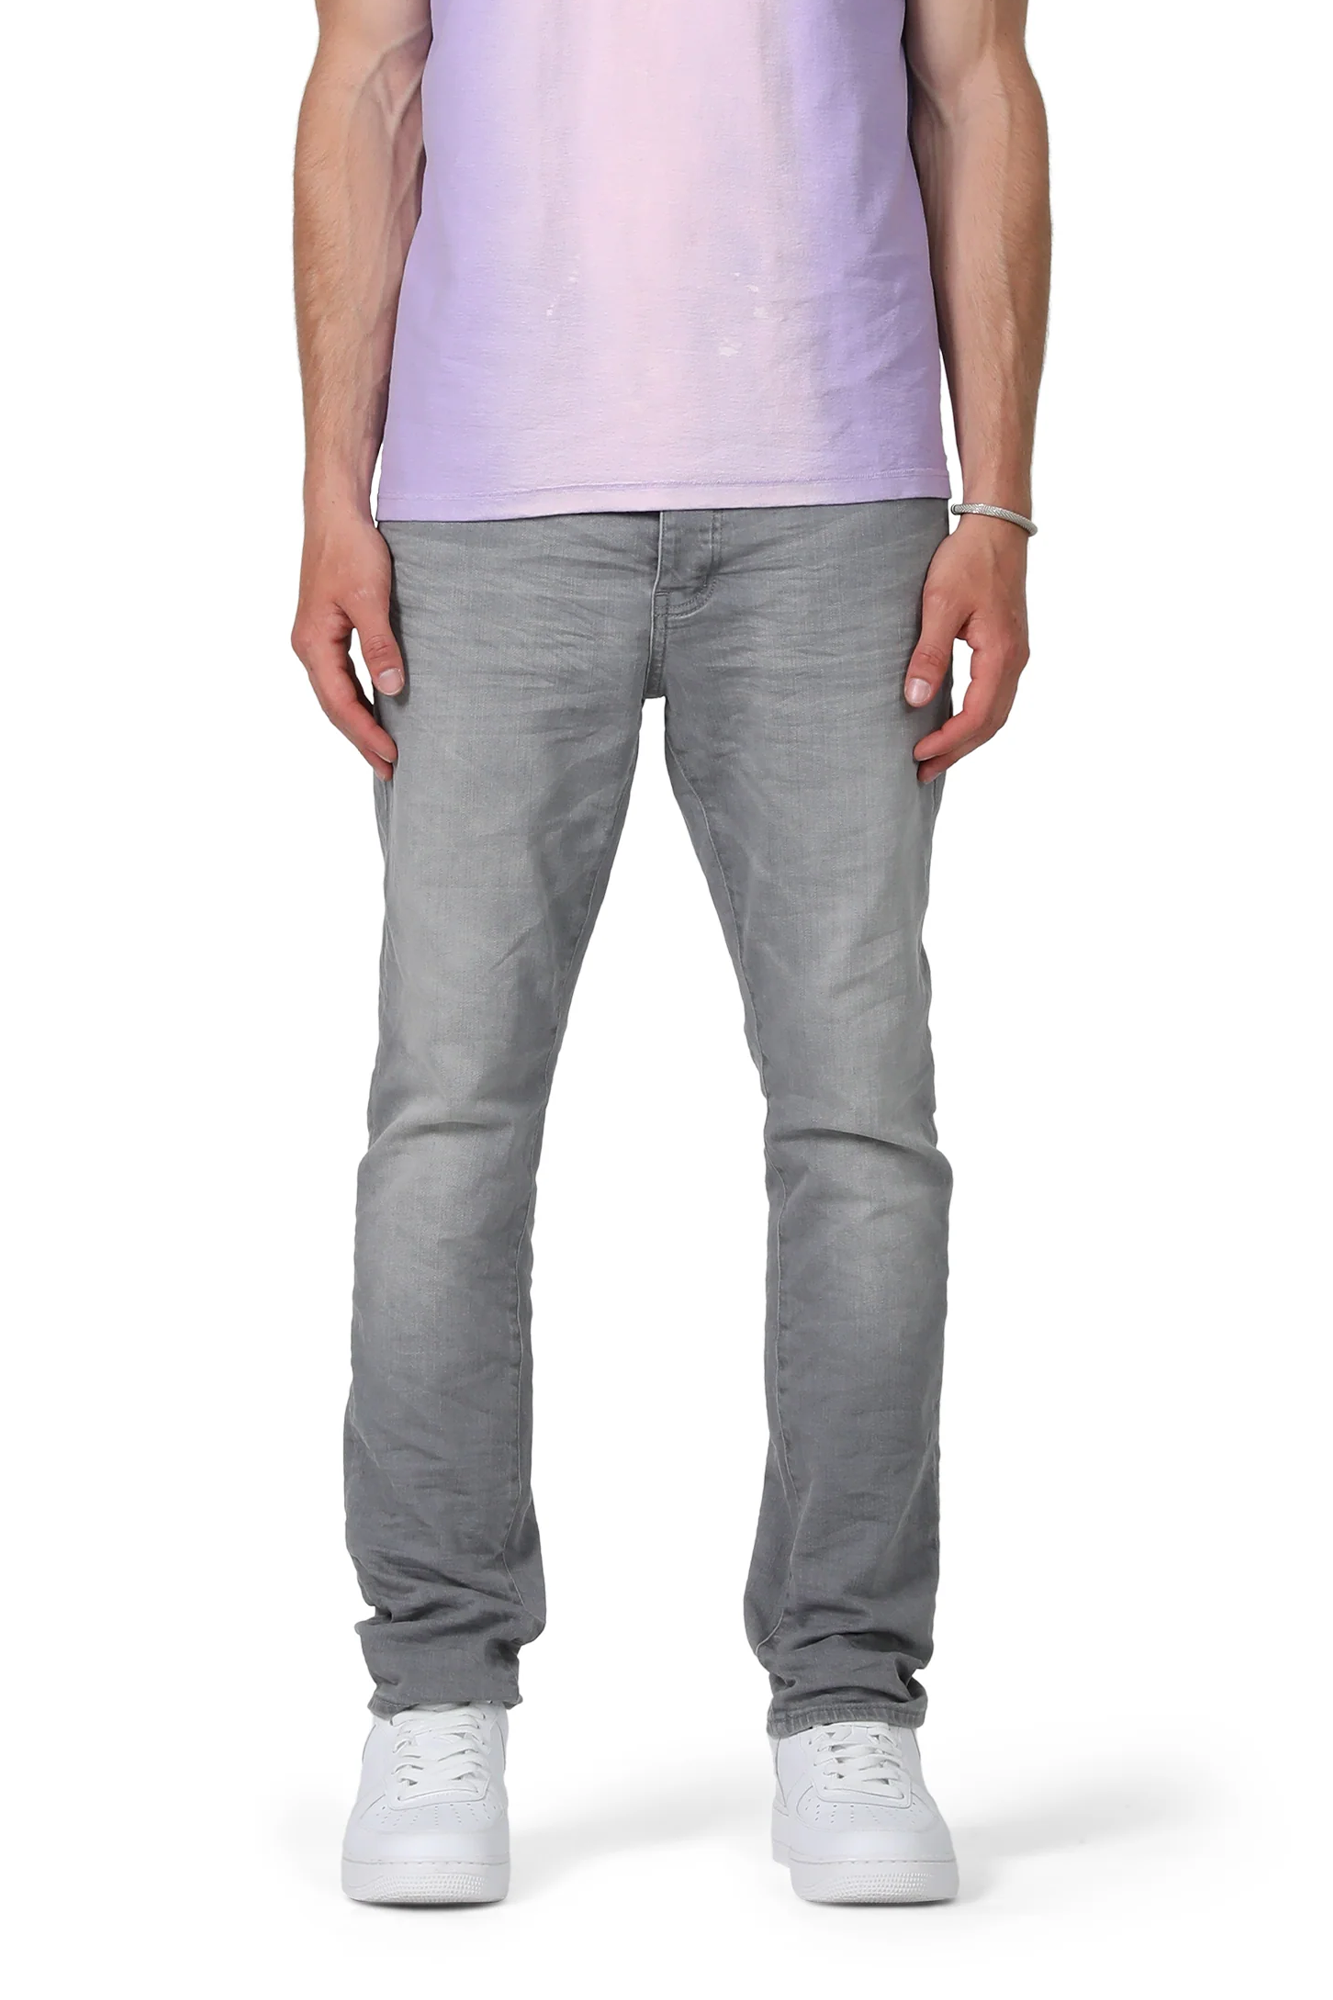 NWT Grey Purple Brand Iridescent Painter Grey Jeans Size 31 $320